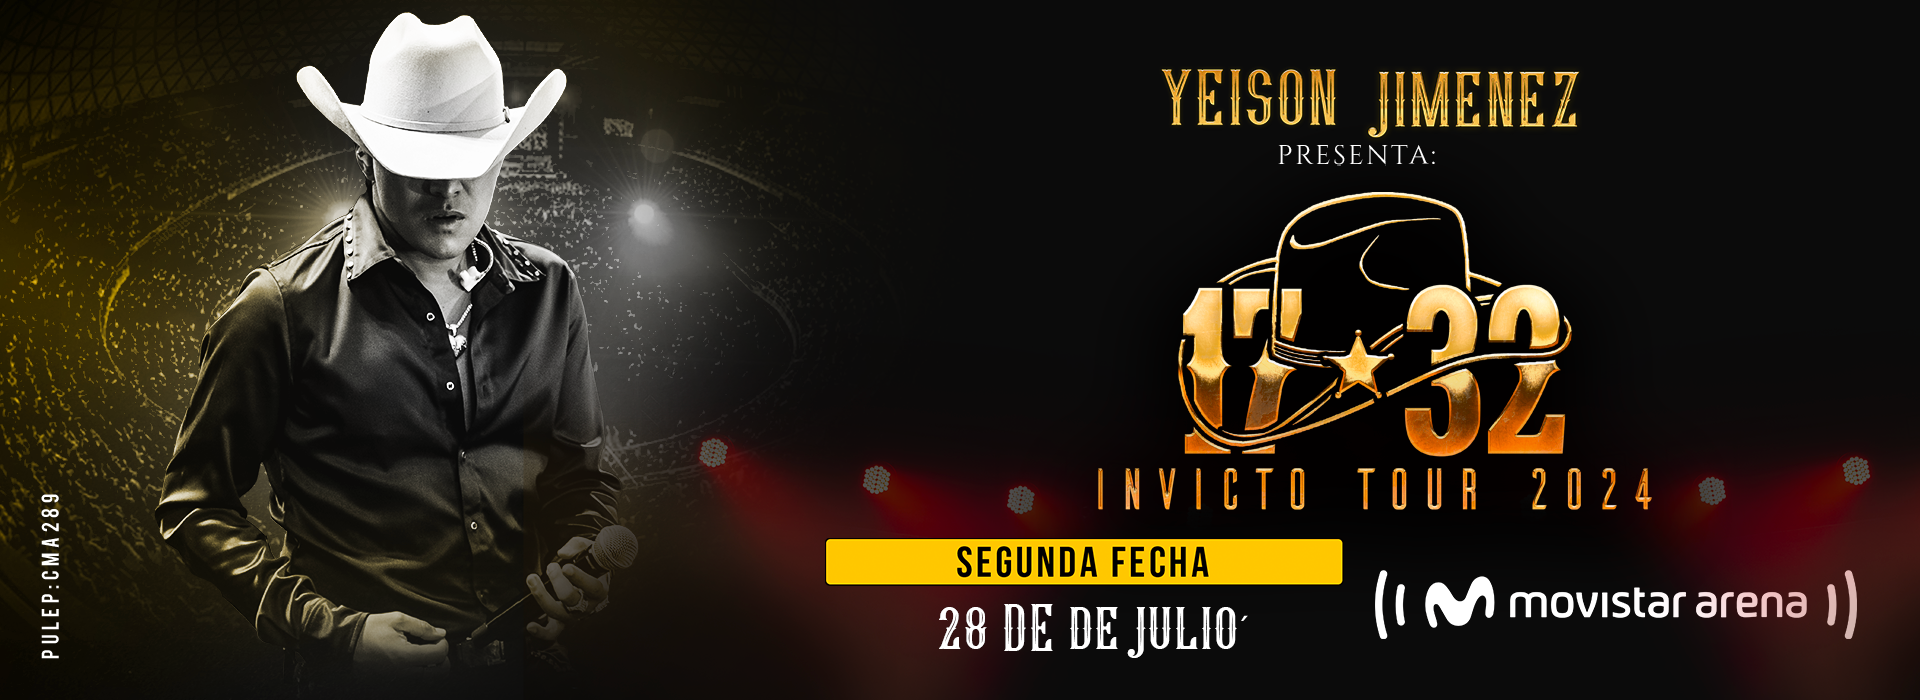 YEISON JIMENEZ INVICTO TOUR 17 * 32 - SEGUNDA FECHA 2